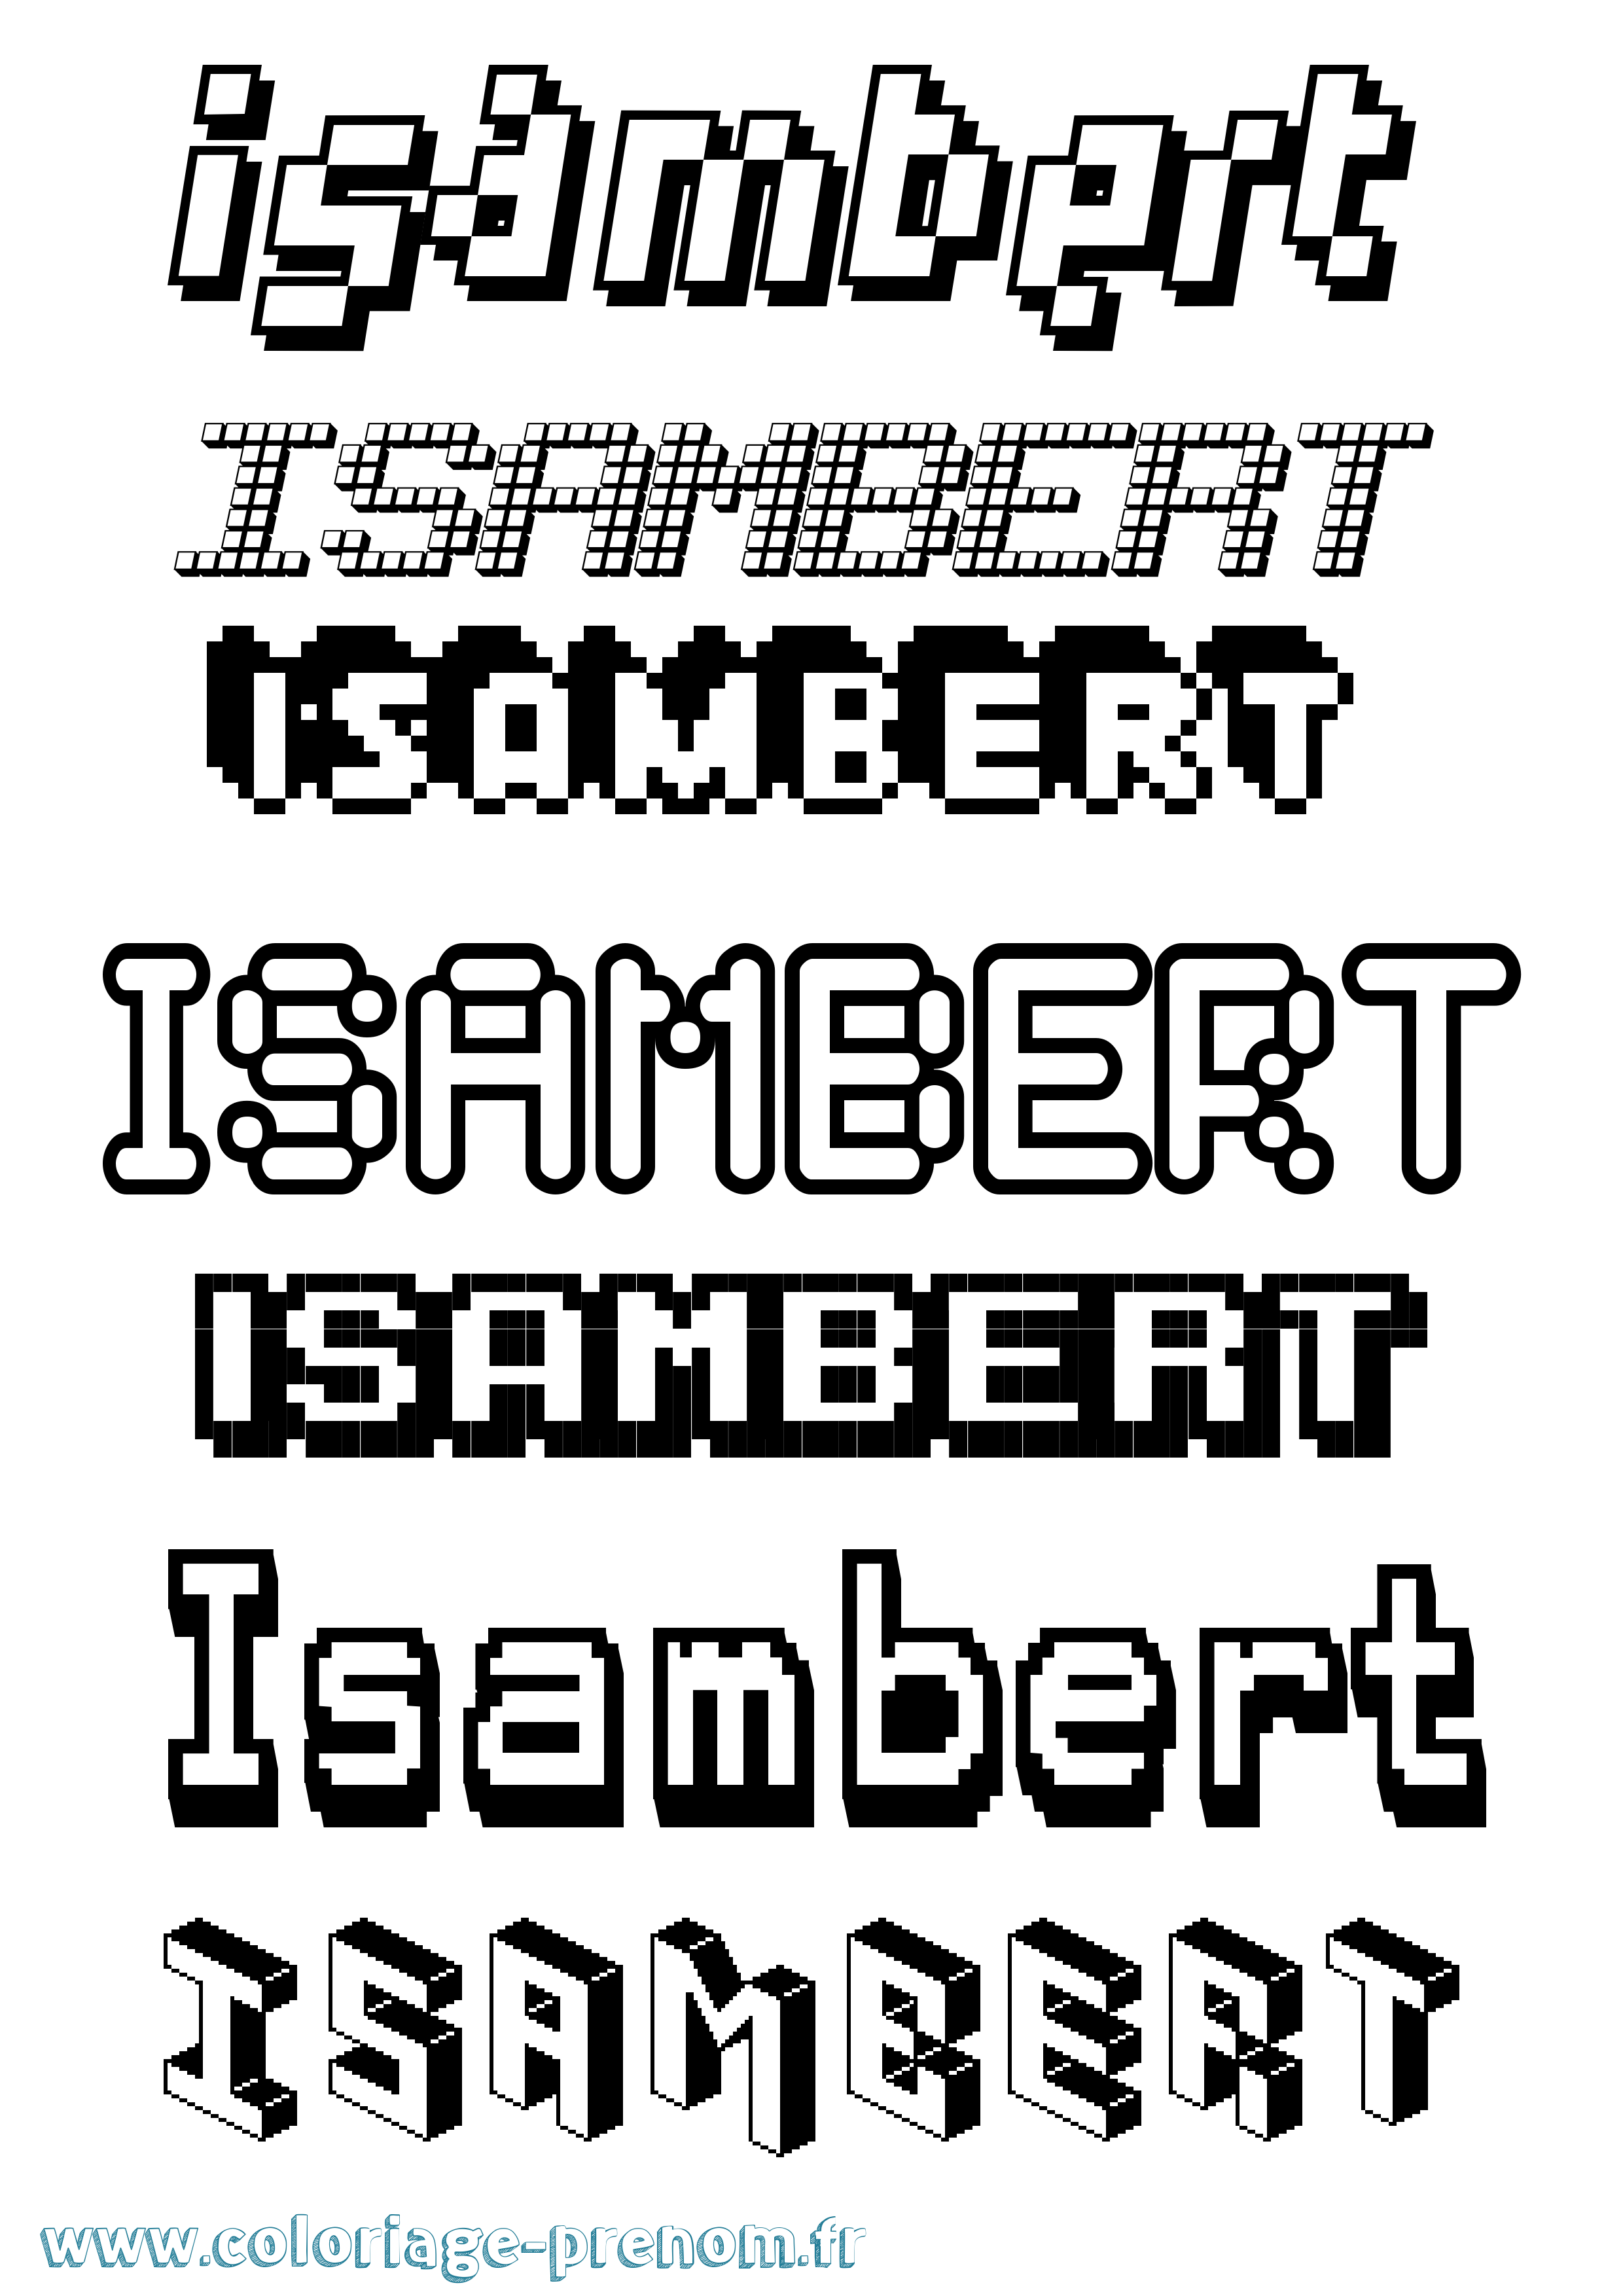 Coloriage prénom Isambert Pixel